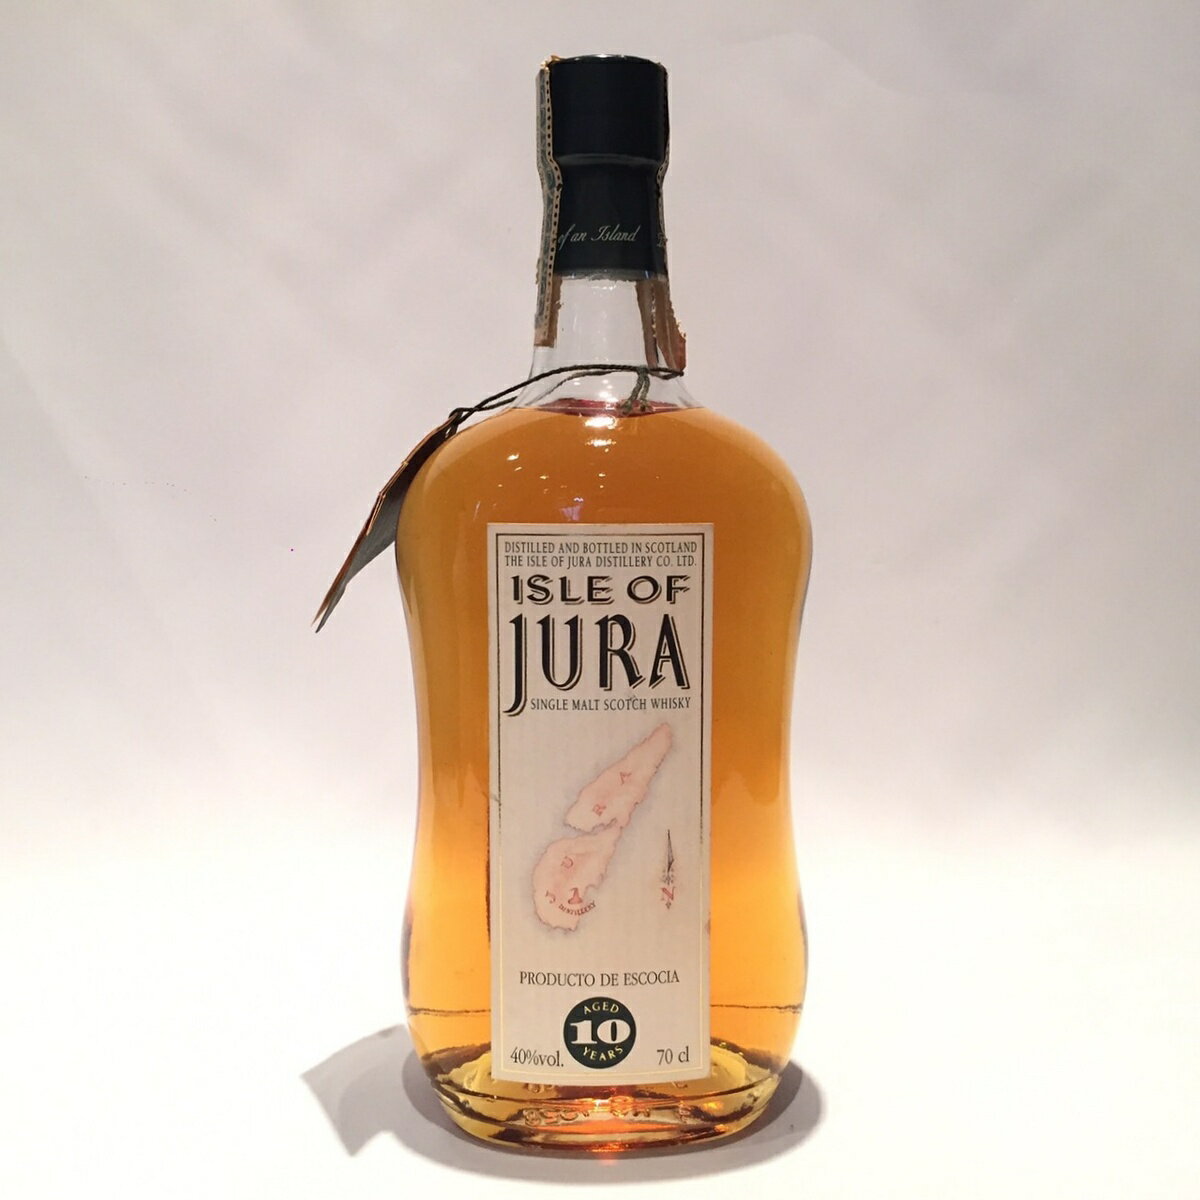 ISLE OF JURA アイル オブ ジュラIsle of JuraOriginal Bottling10 Years old40% vol. / 70 clSpa